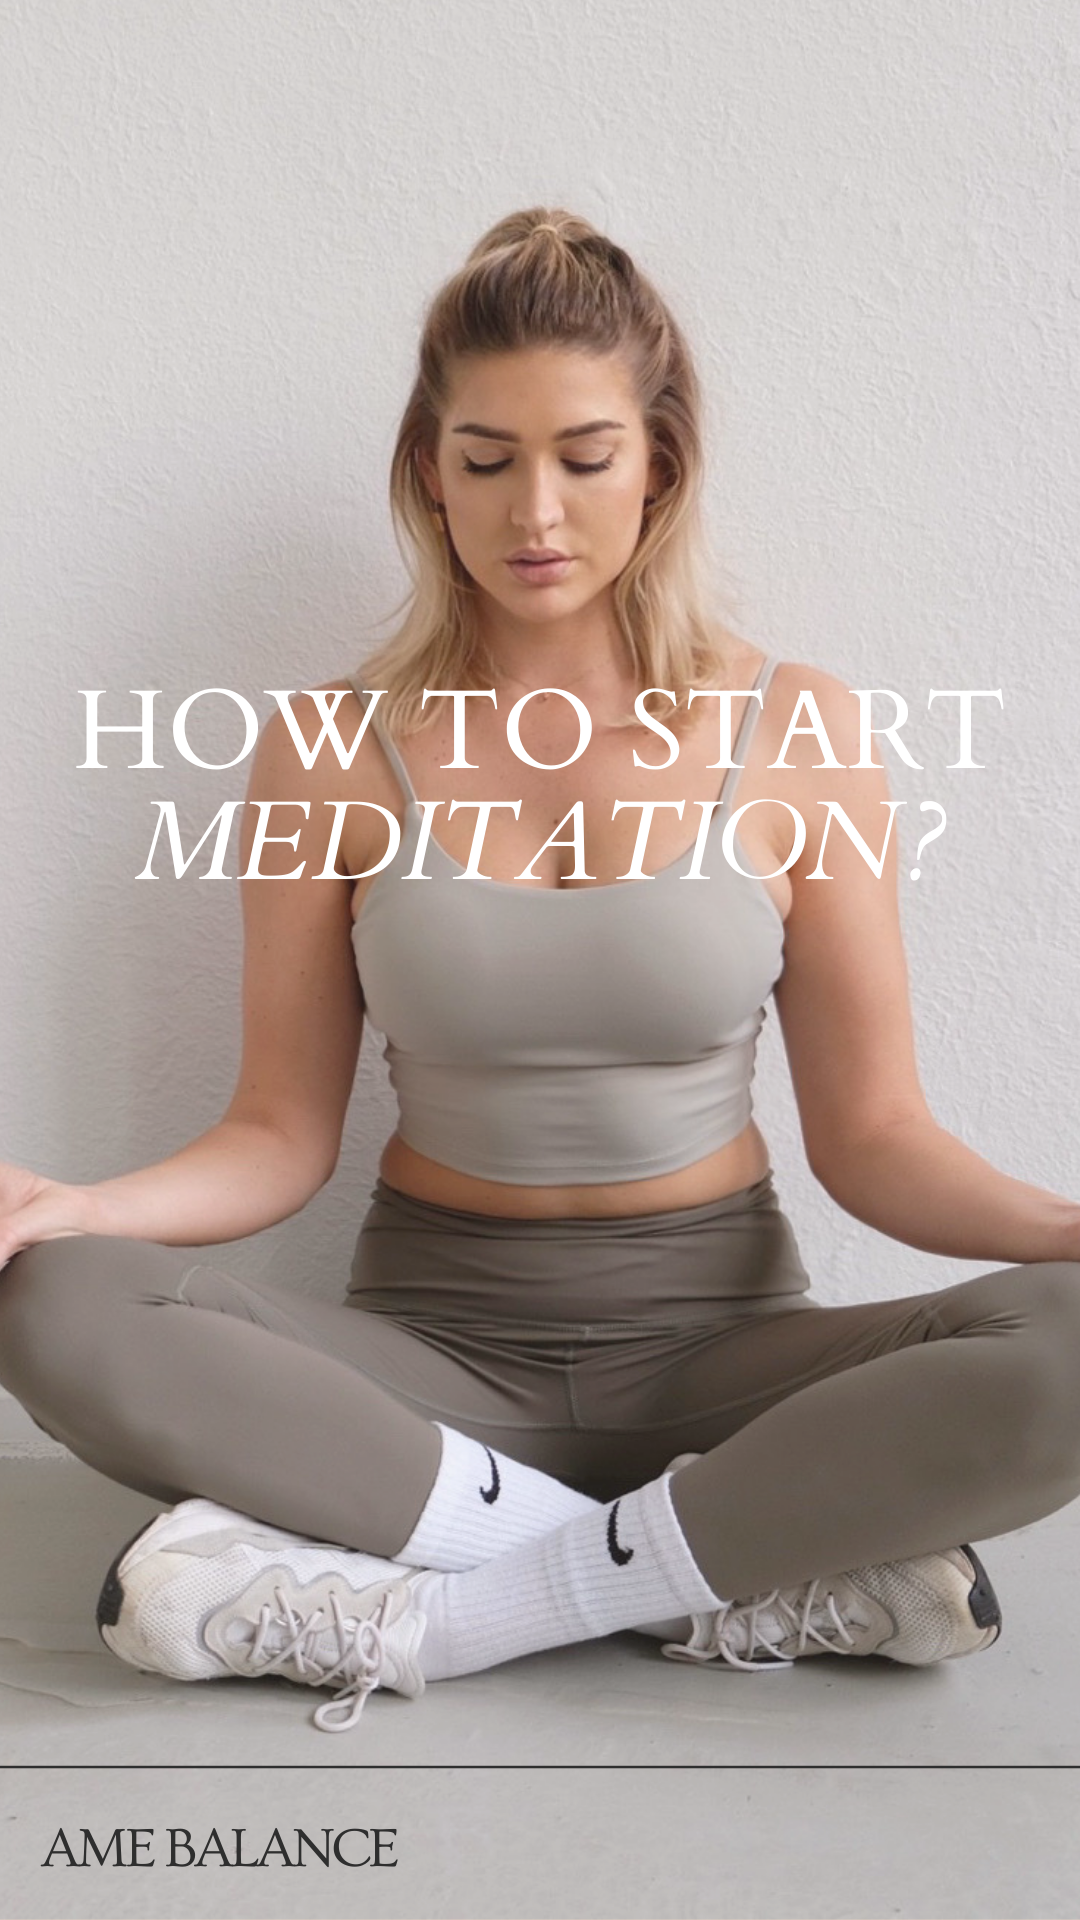 5 tips to start Meditation